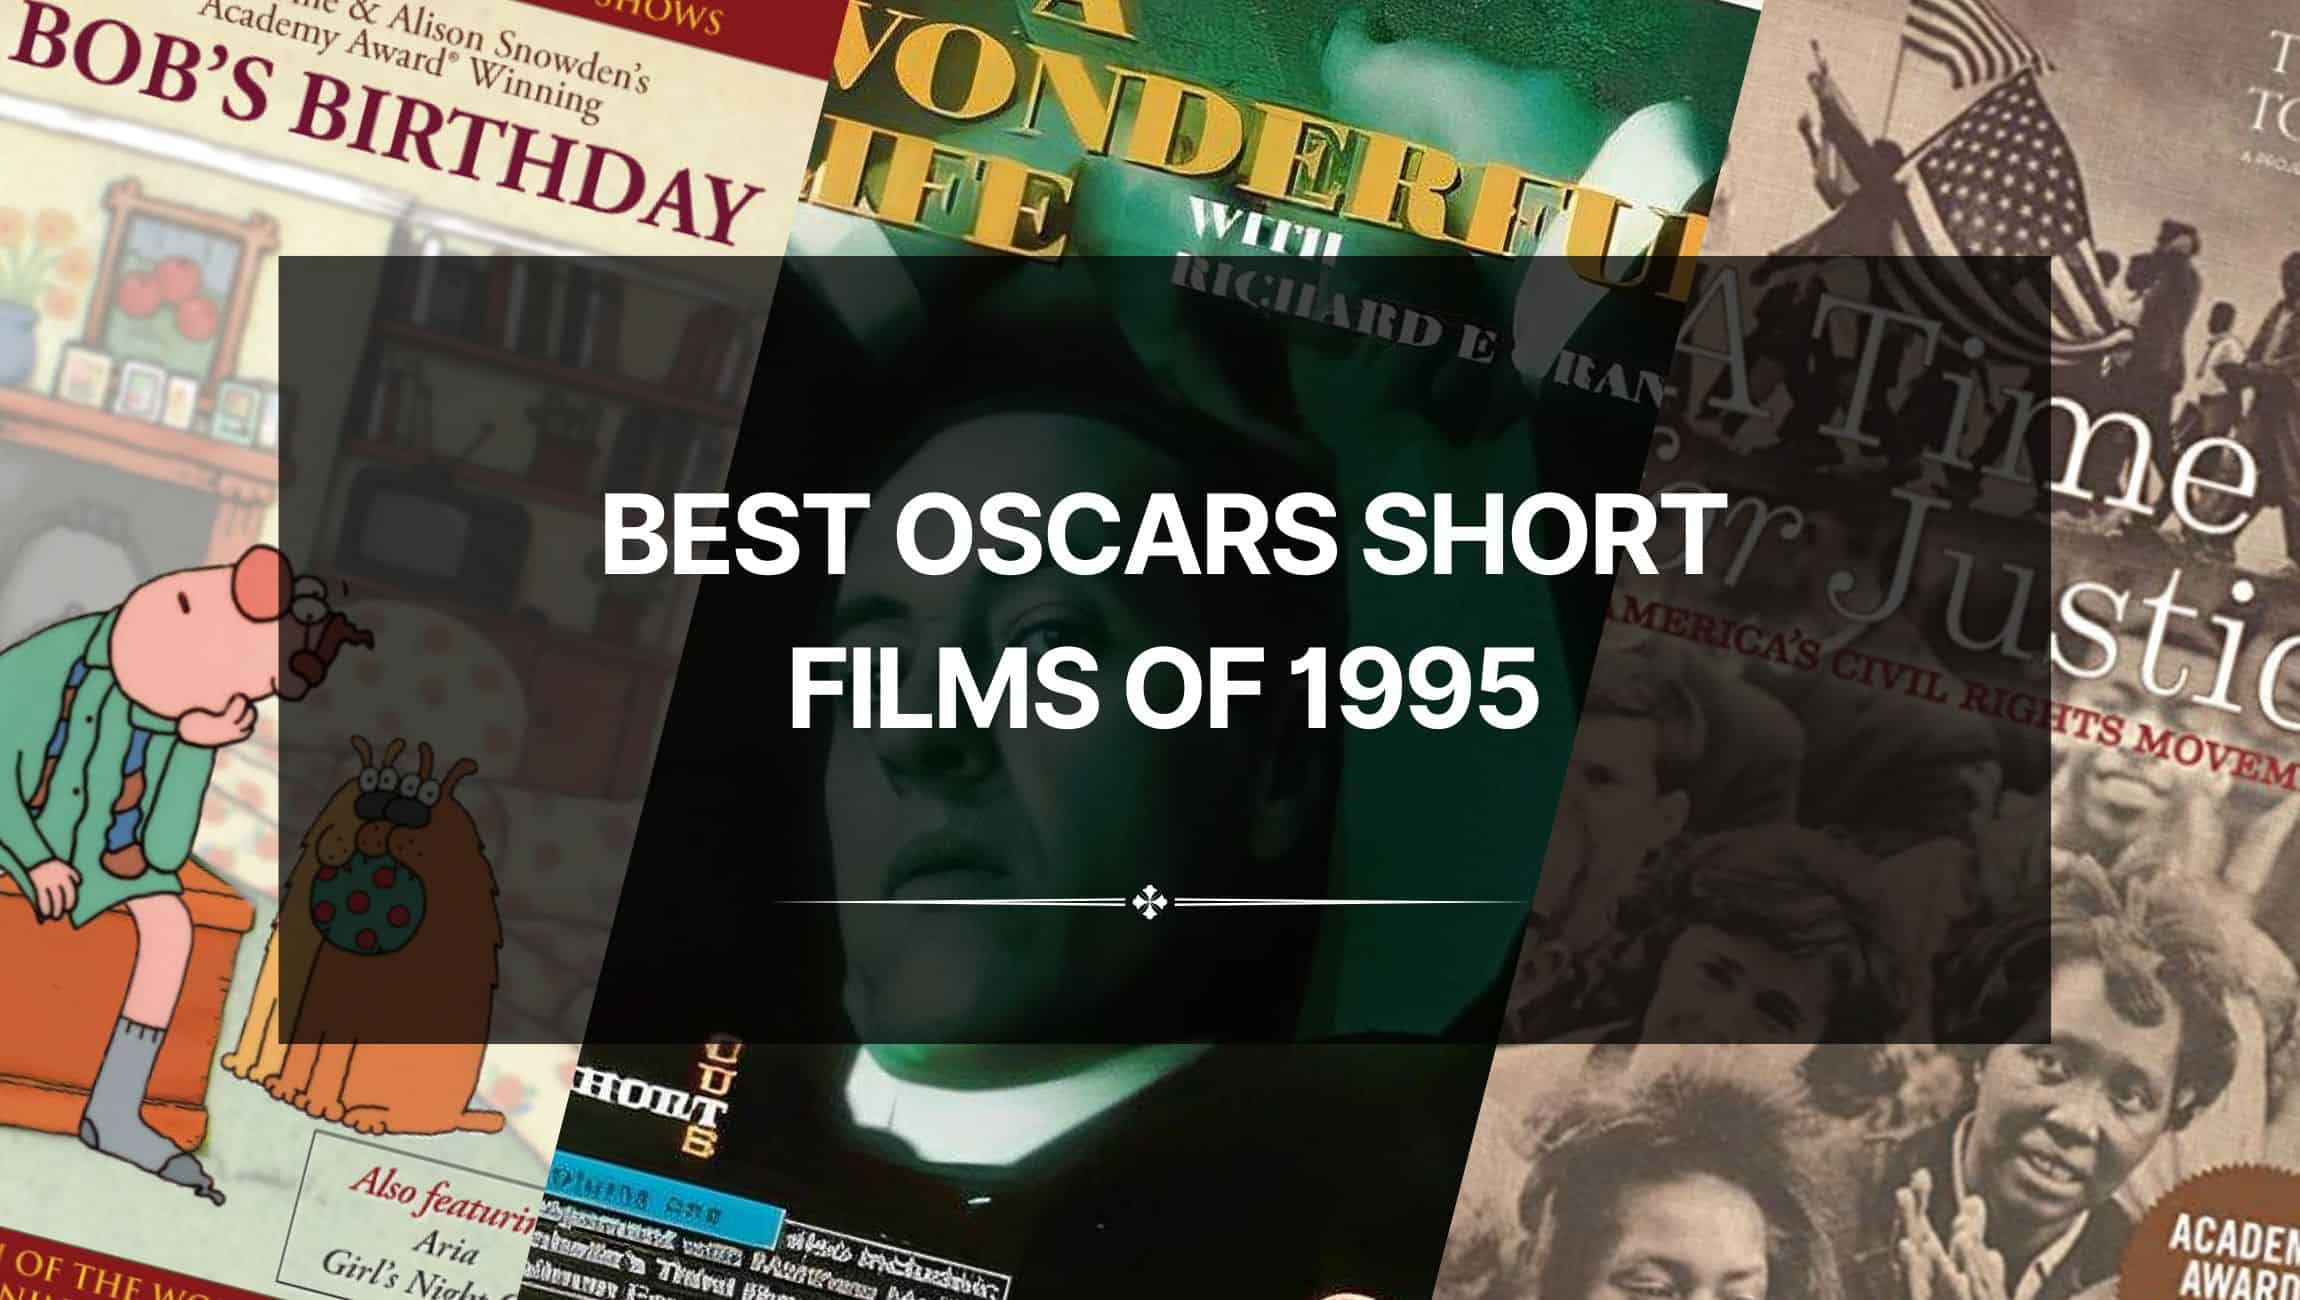 Best Oscars Short Films of 1995